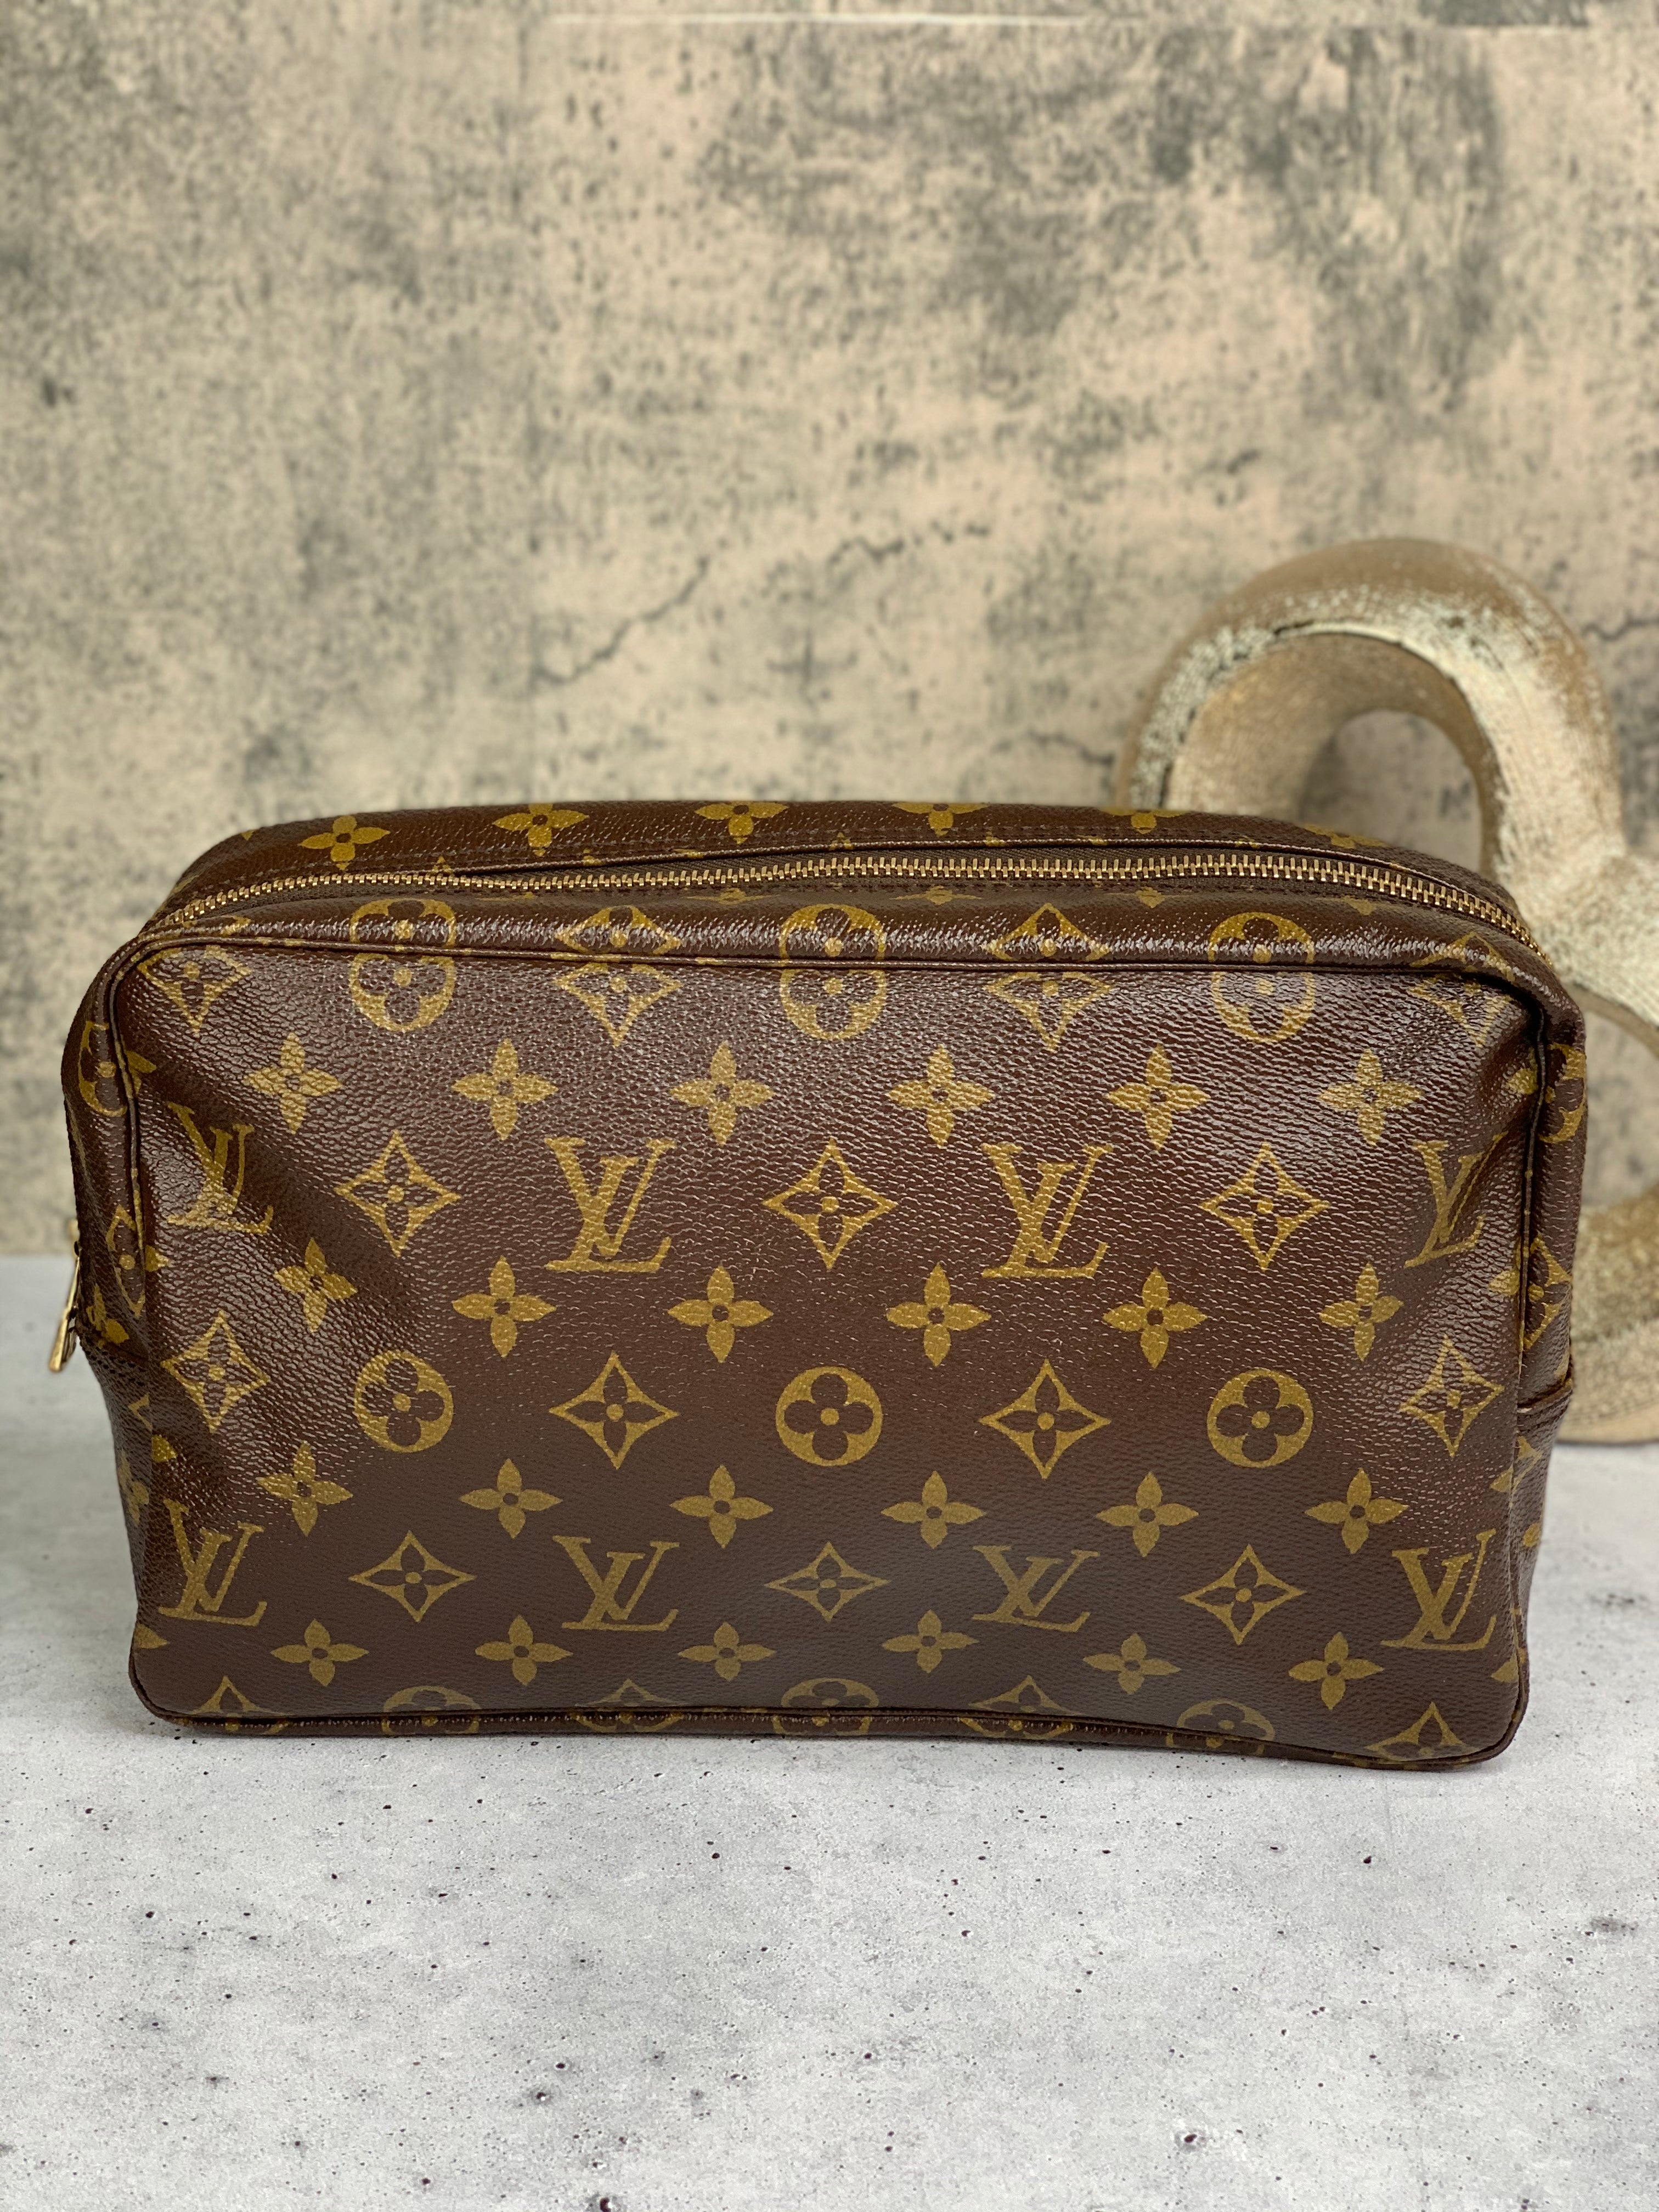 Louis Vuitton Monogram Trousse Toilette 28 - Brown Cosmetic Bags